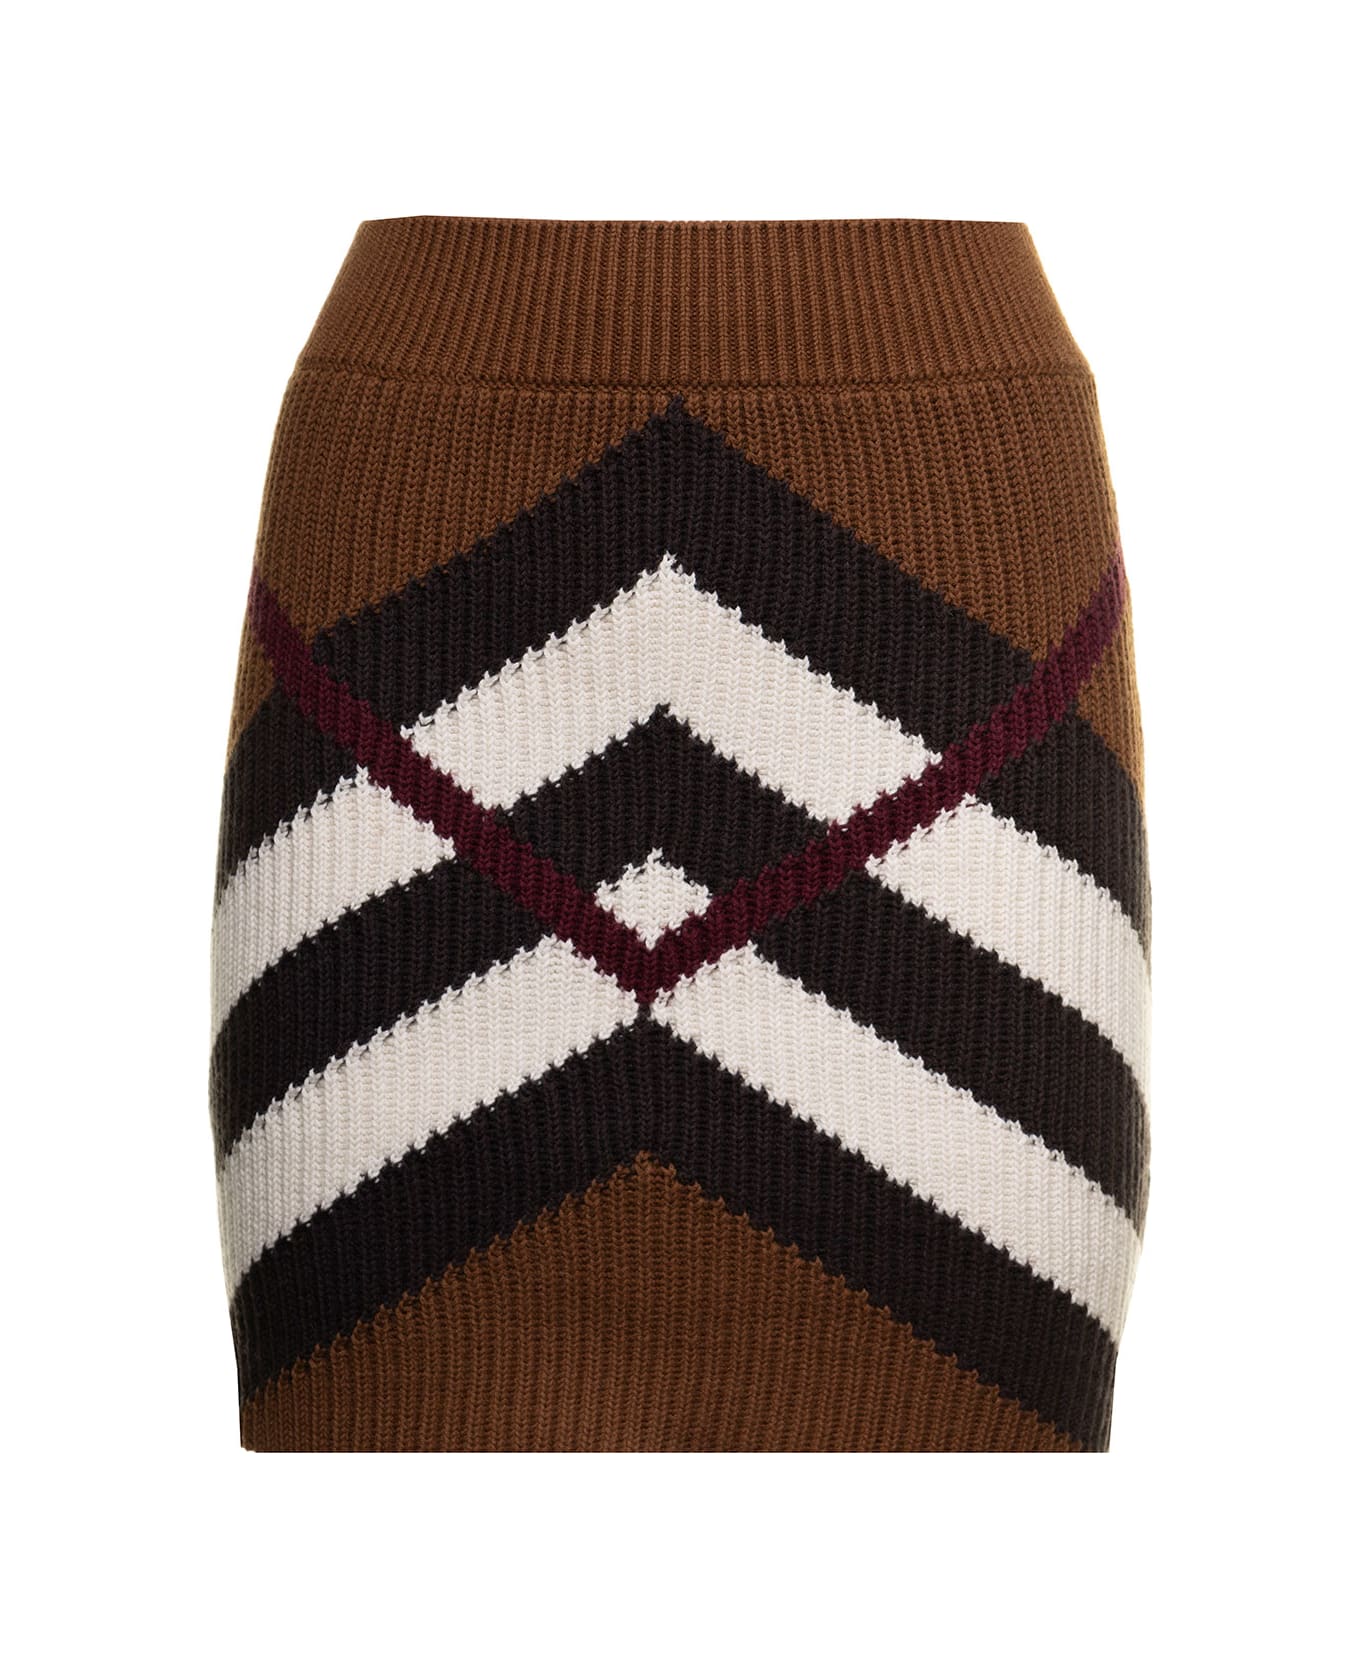 Burberry Kiri Cotton And Cashmere Skirt With Zig Zag Check Print Burberry Woman - Brown